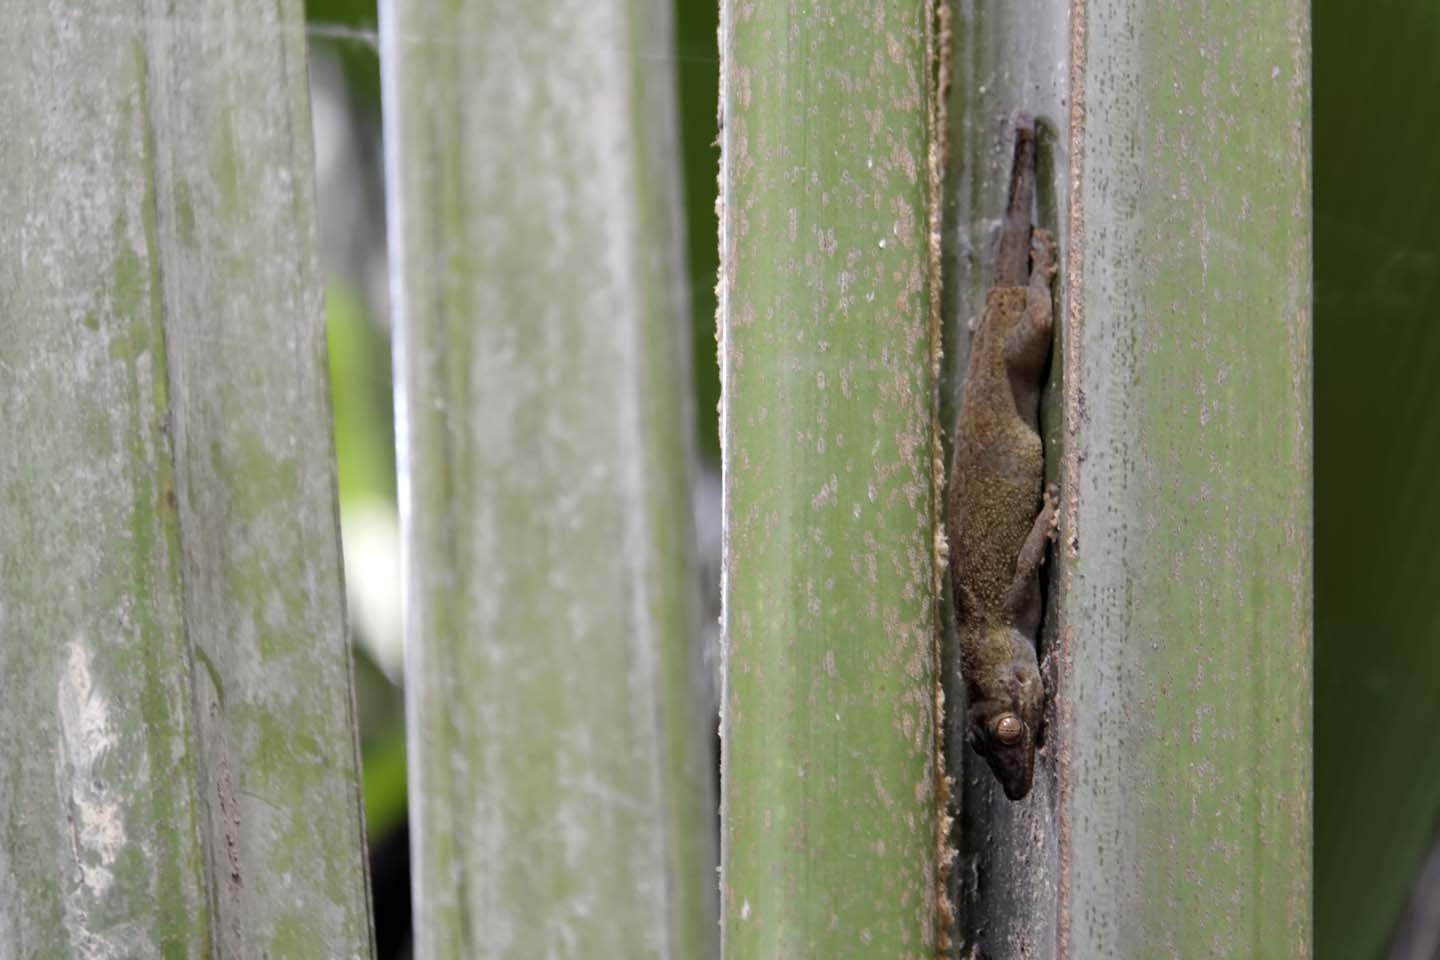 Bild 6: Taggecko im Vallée de Mai | Day Gecko